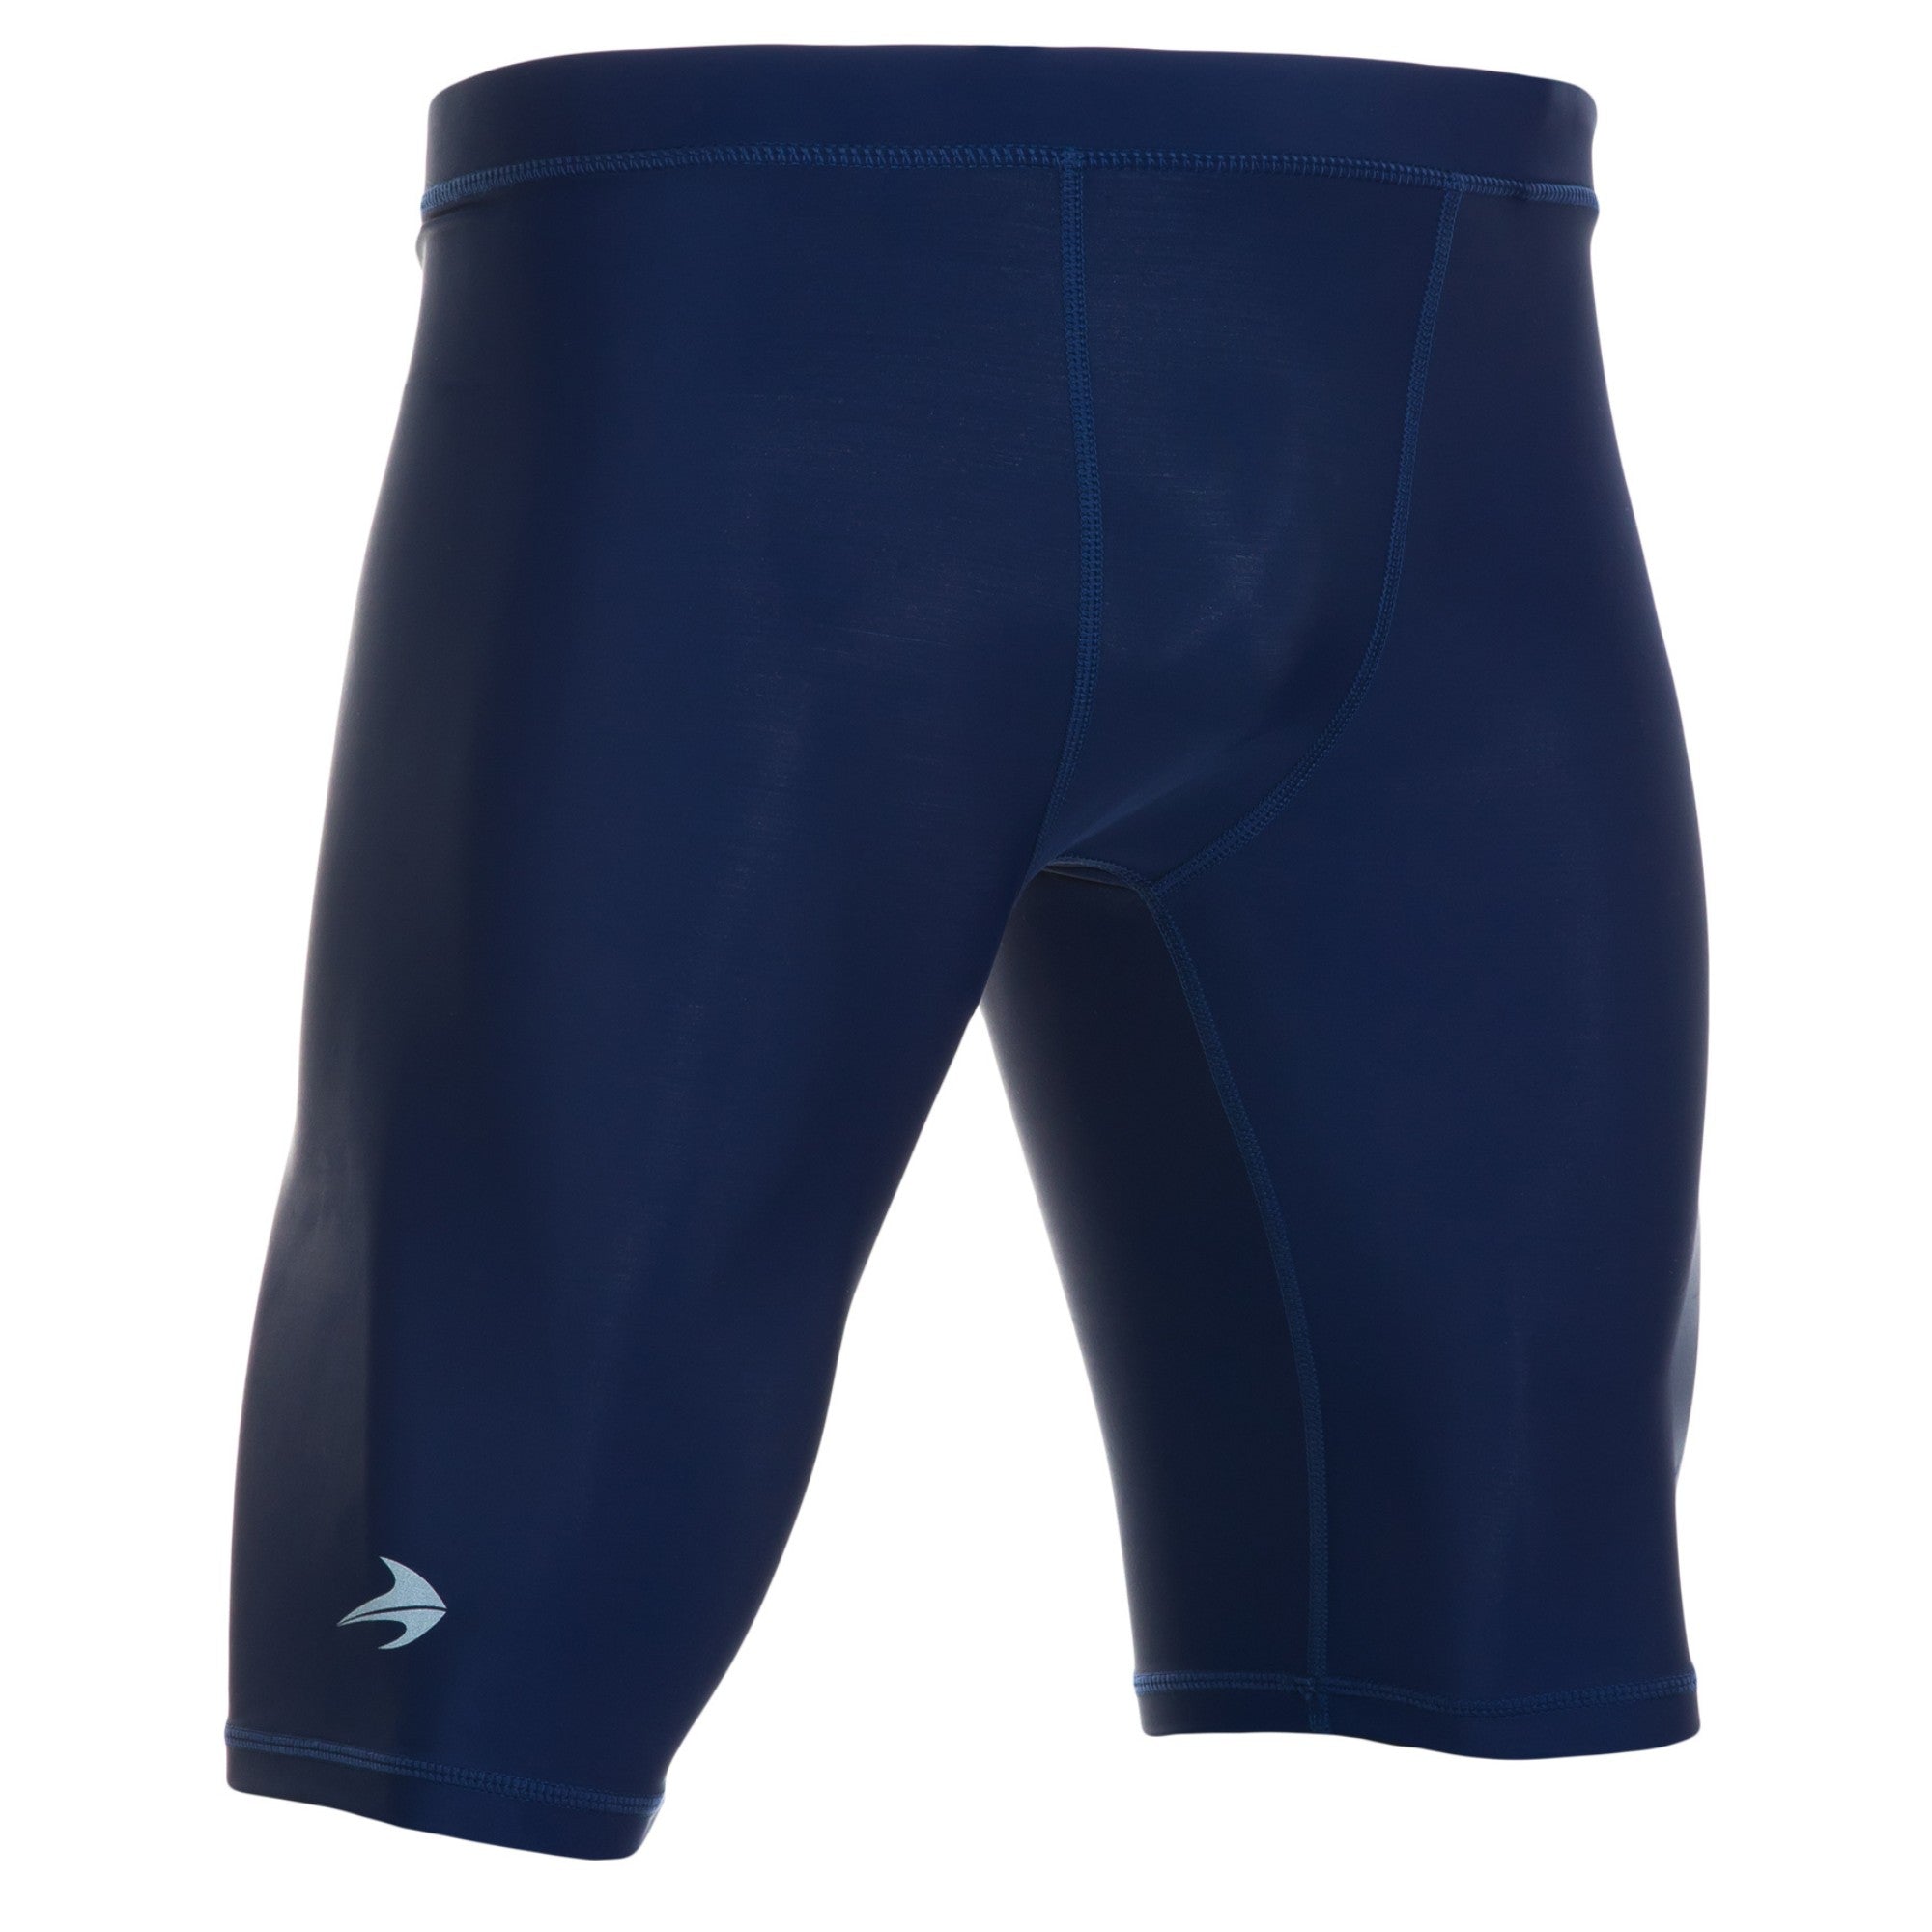 Men's 9" Compression Shorts - Navy Blue